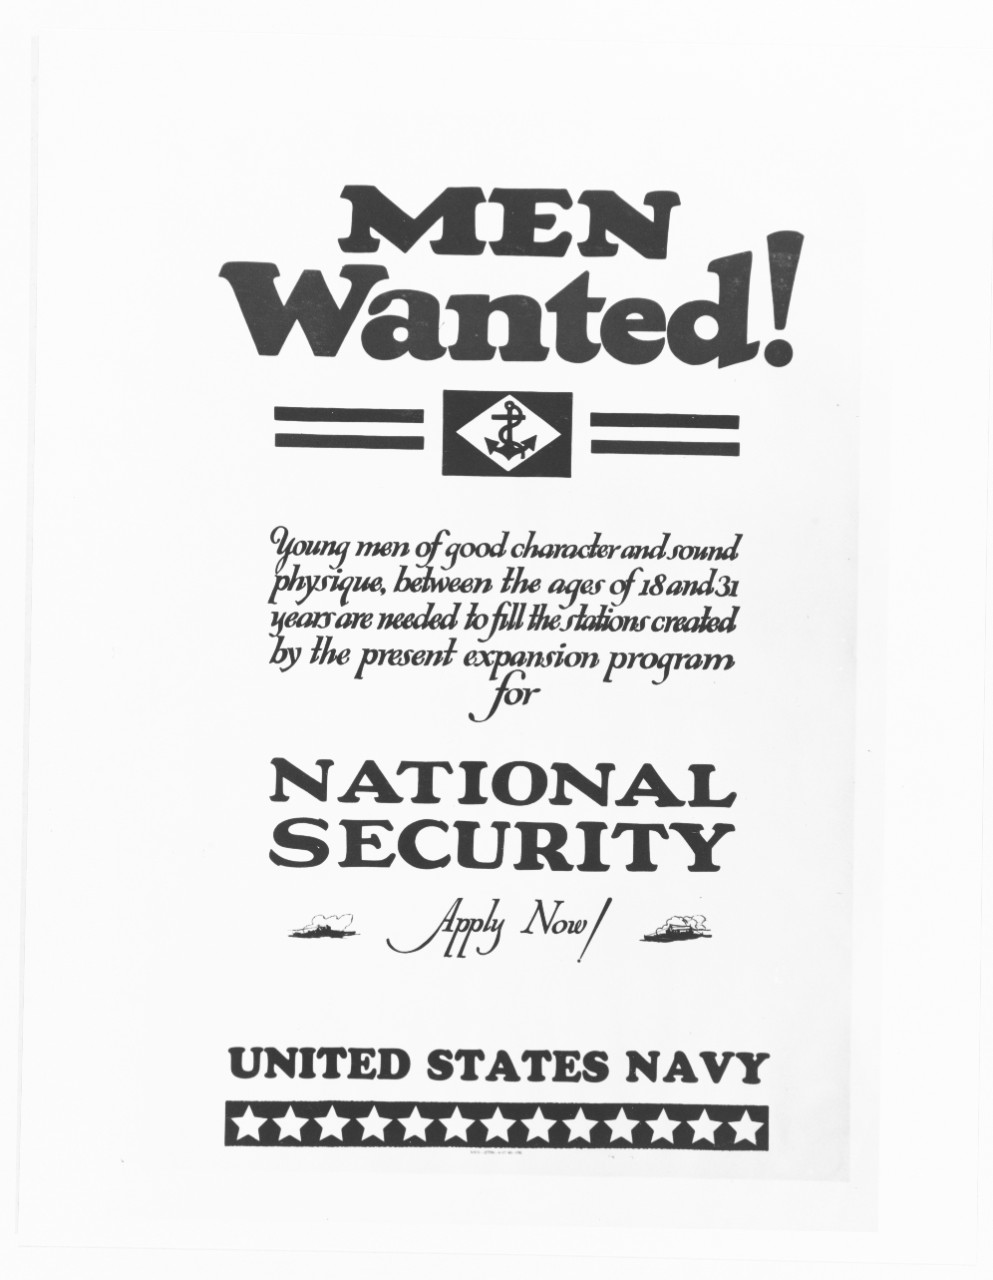 Navy poster, "Men Wanted!"